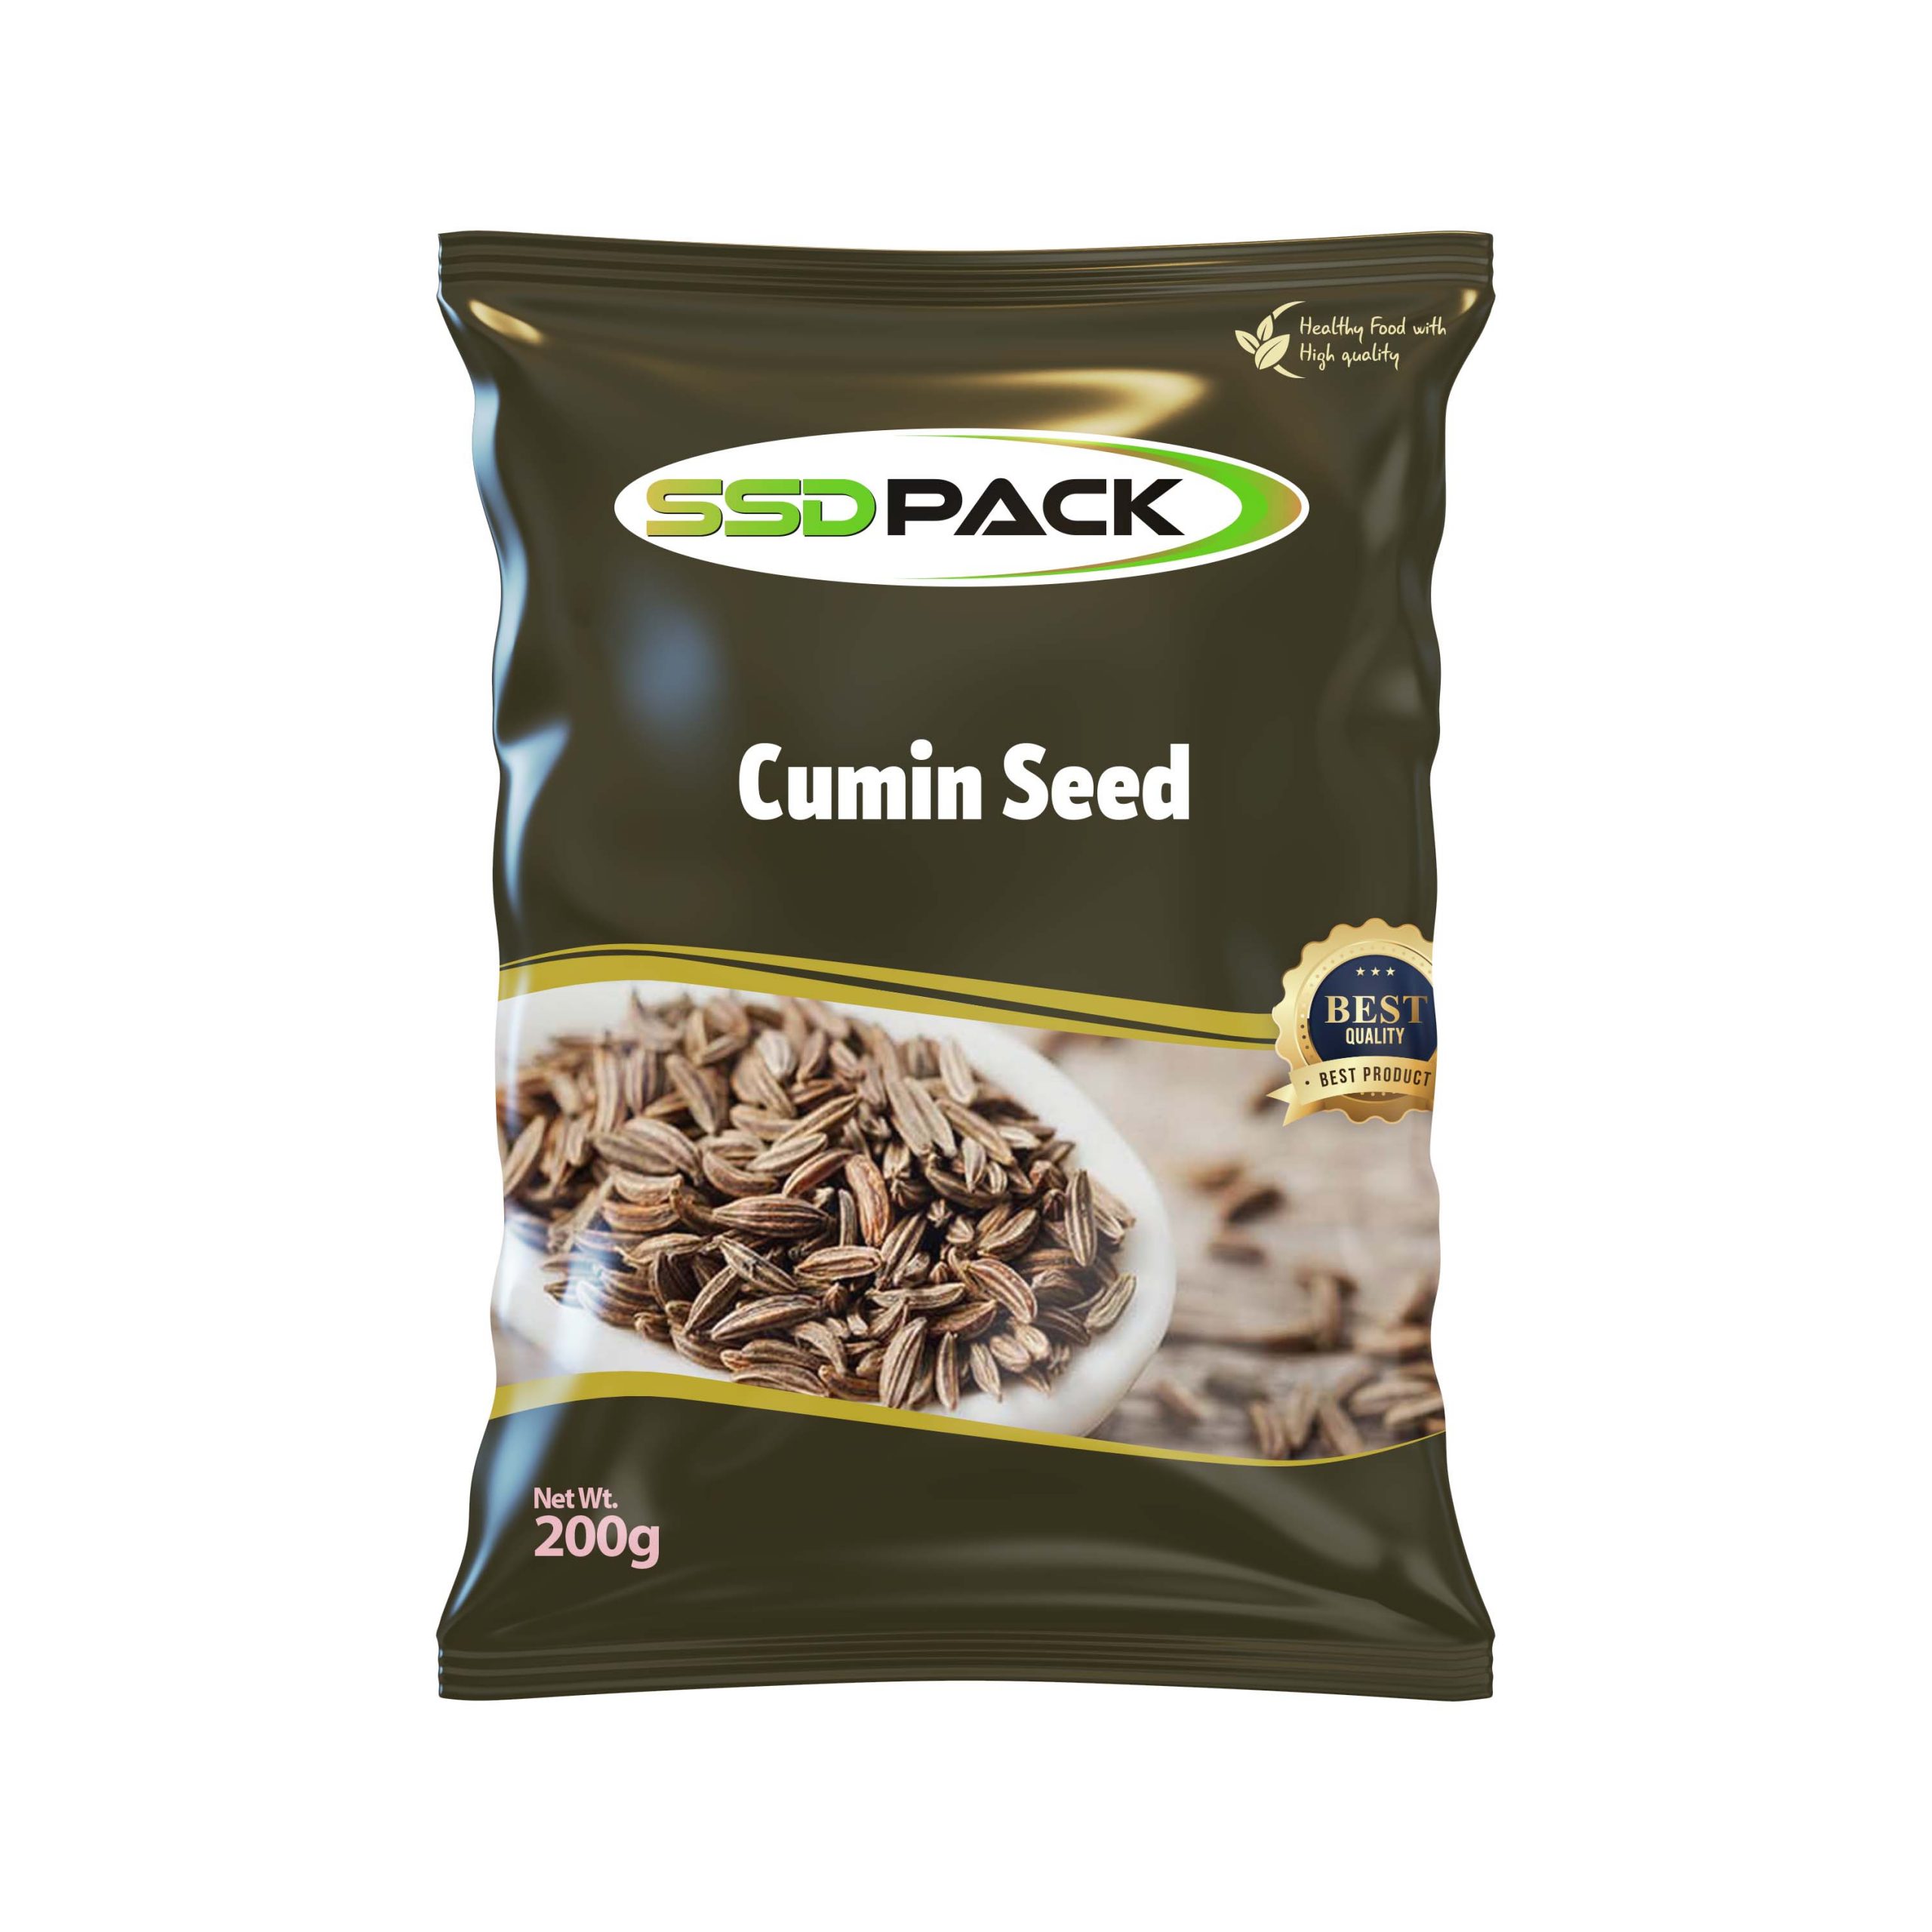 Cumin Seed scaled